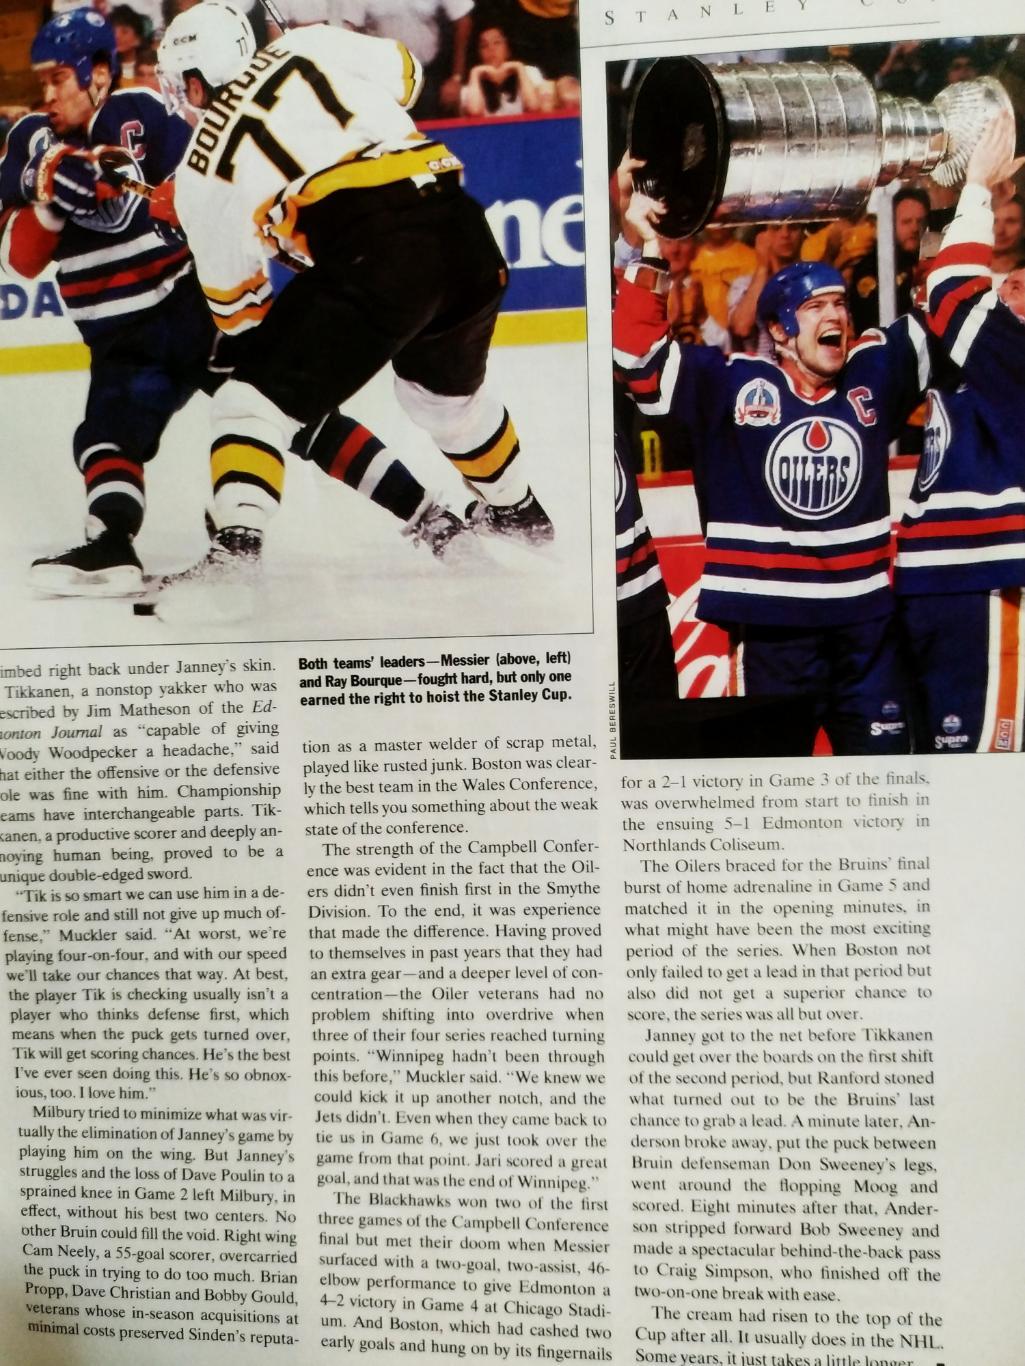 ХОККЕЙ ЕЖЕНЕДЕЛЬНИК СПОРТ ИЛЛЮСТРЕЙТЕД НХЛ 4 JUN 1990 NHL SPORTS ILLUSTRATED 4